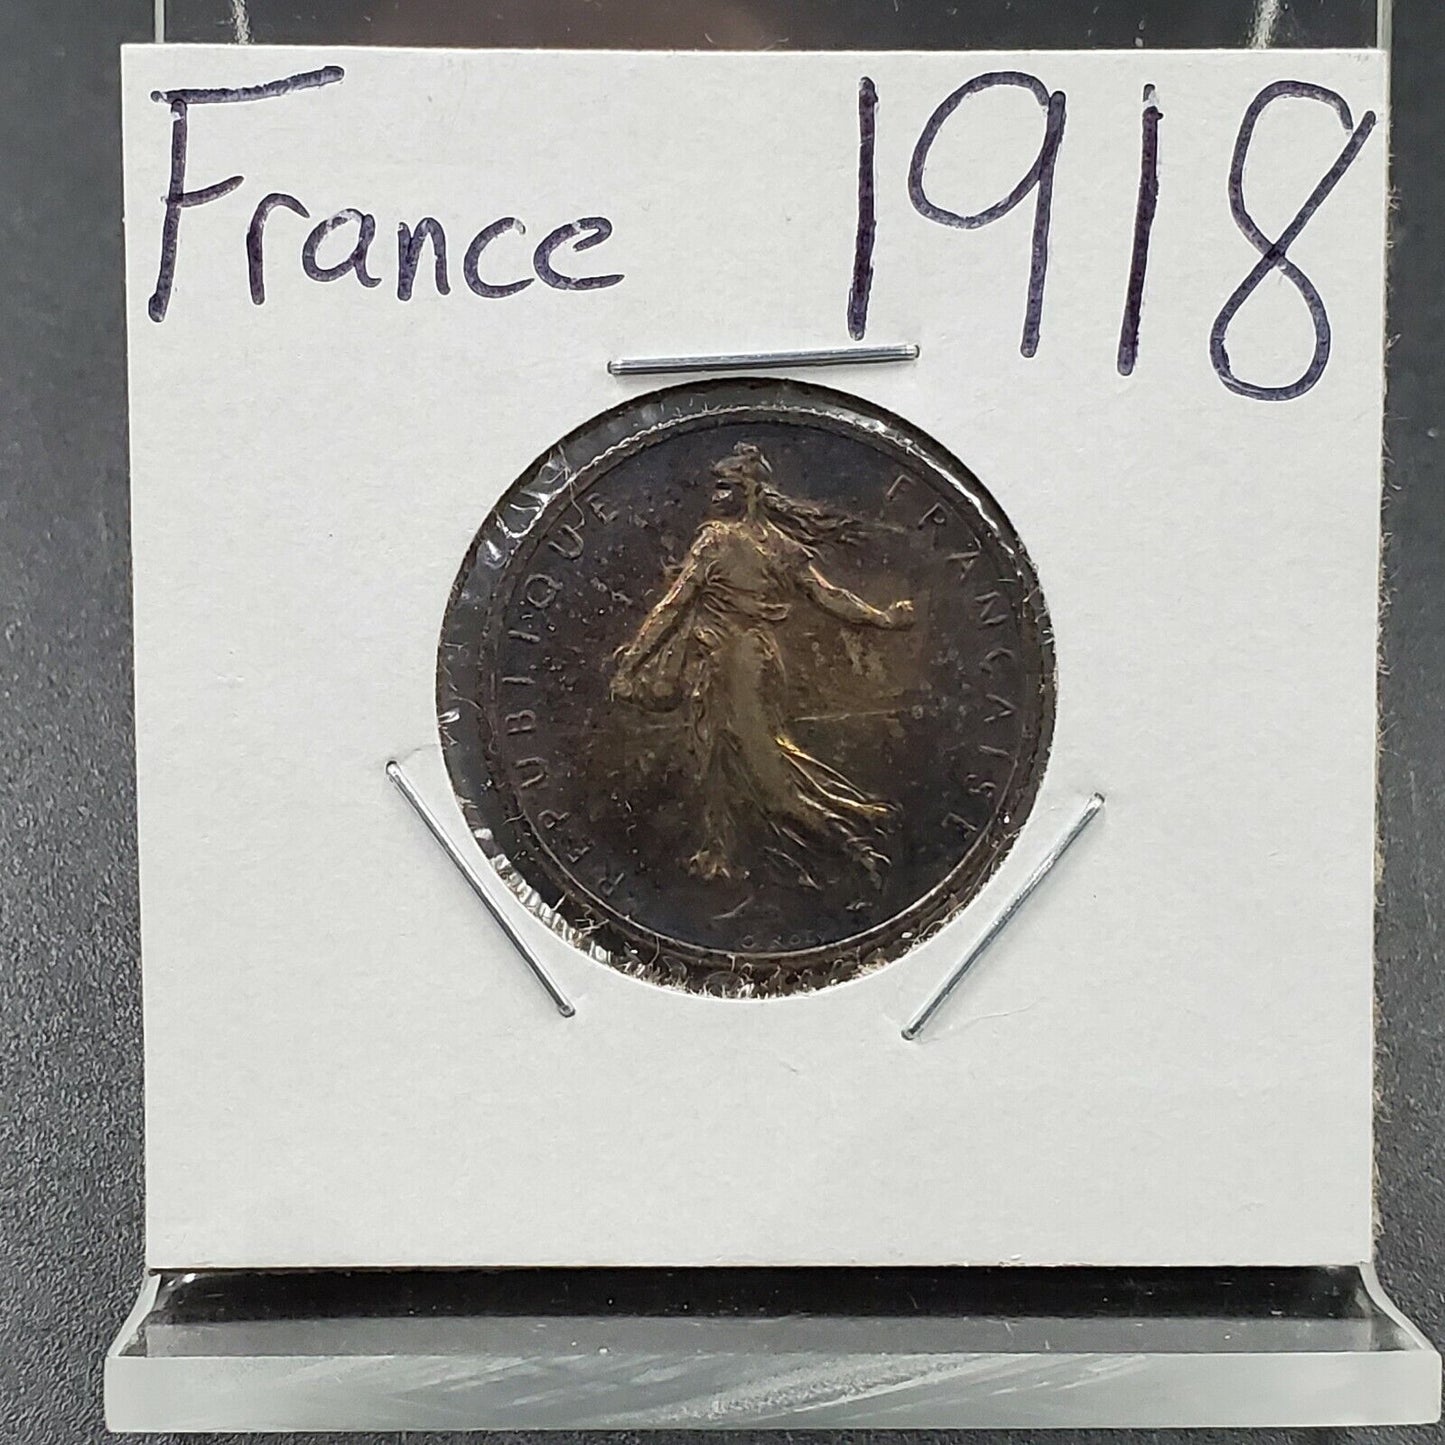 France 1918 1 Franc Silver Coin Neat toning Toner